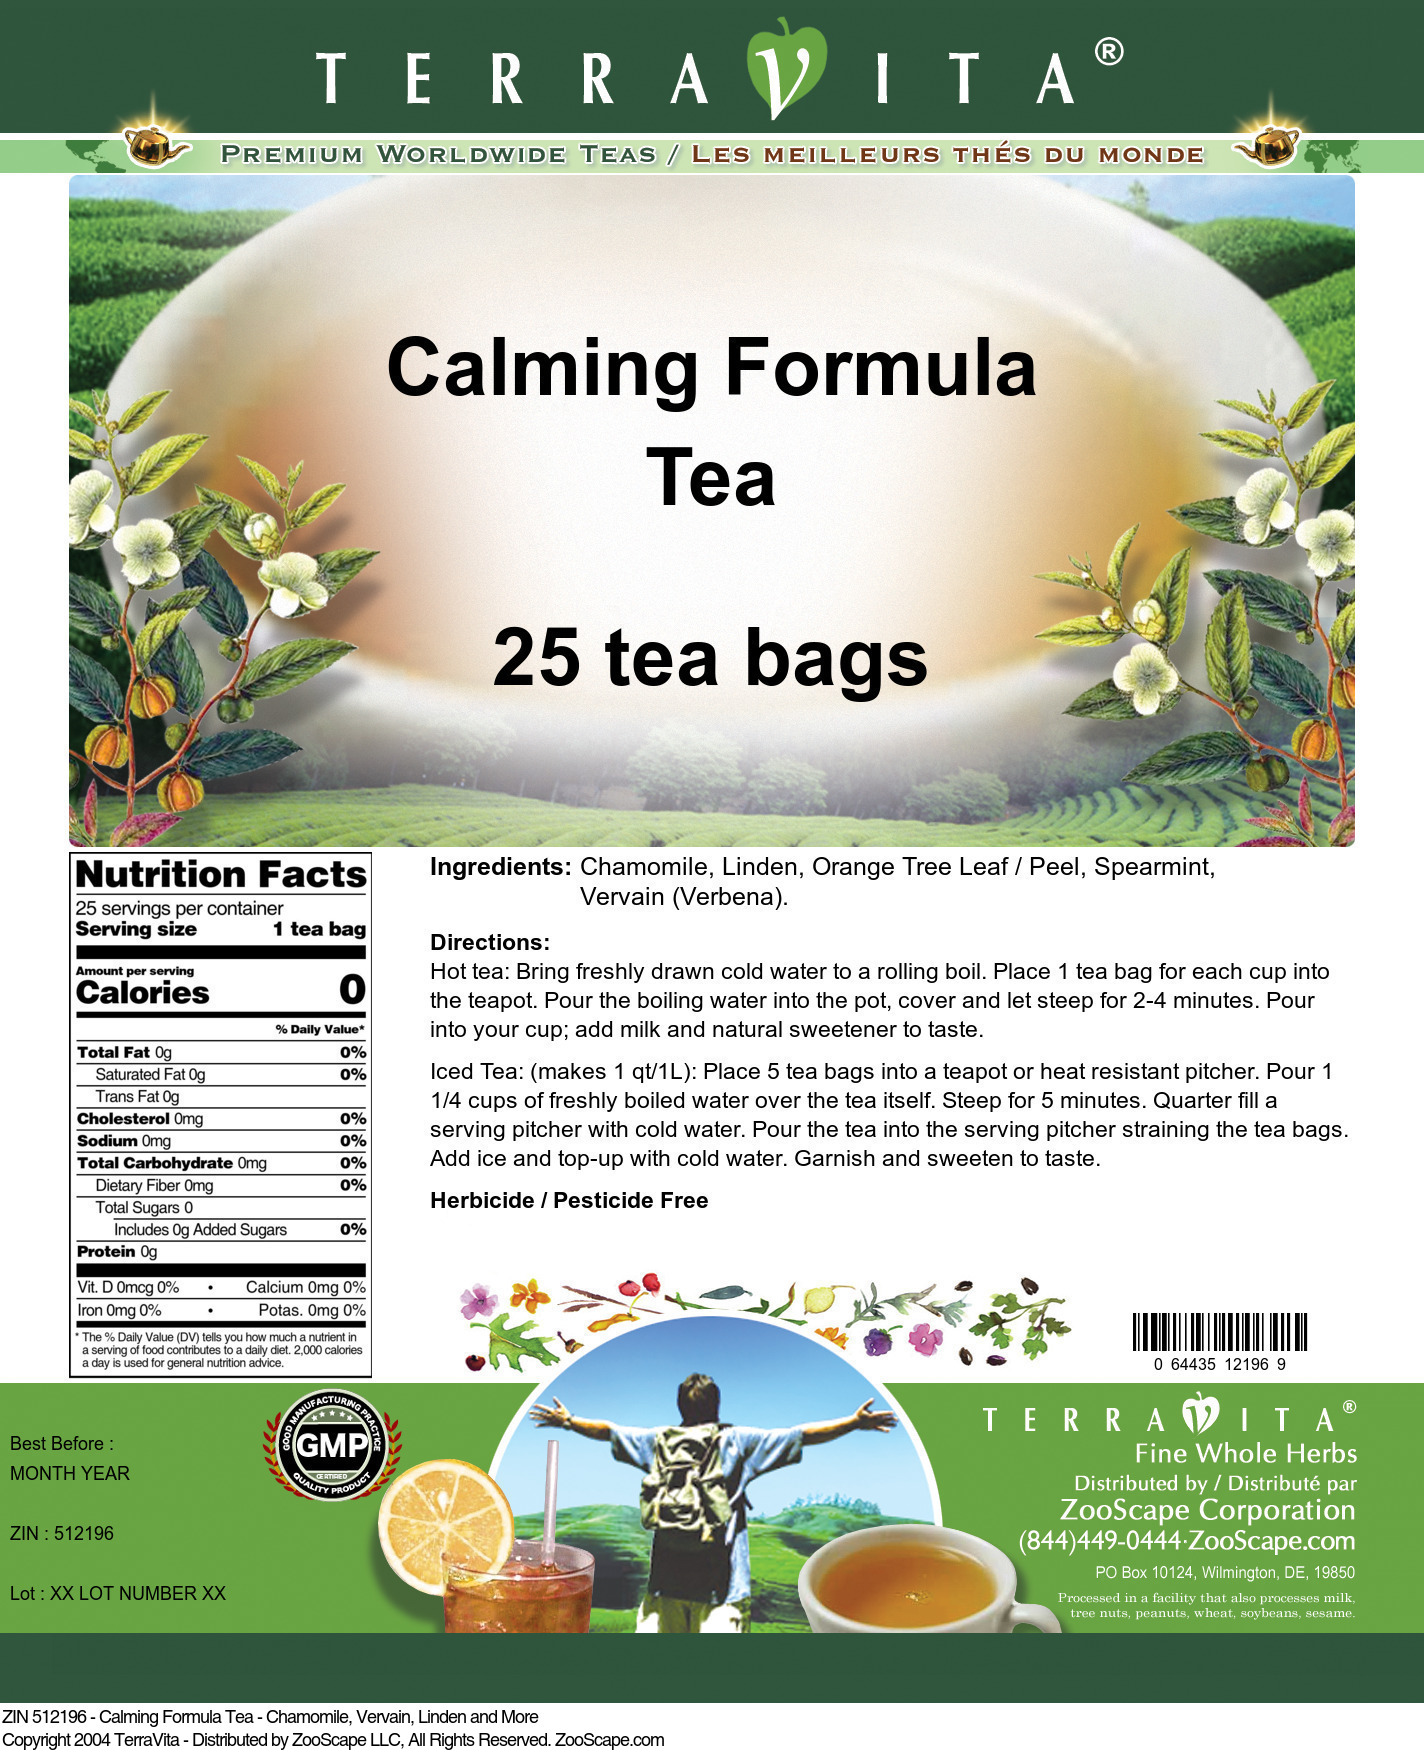 Calming Formula Tea - Chamomile, Vervain, Linden and More - Label